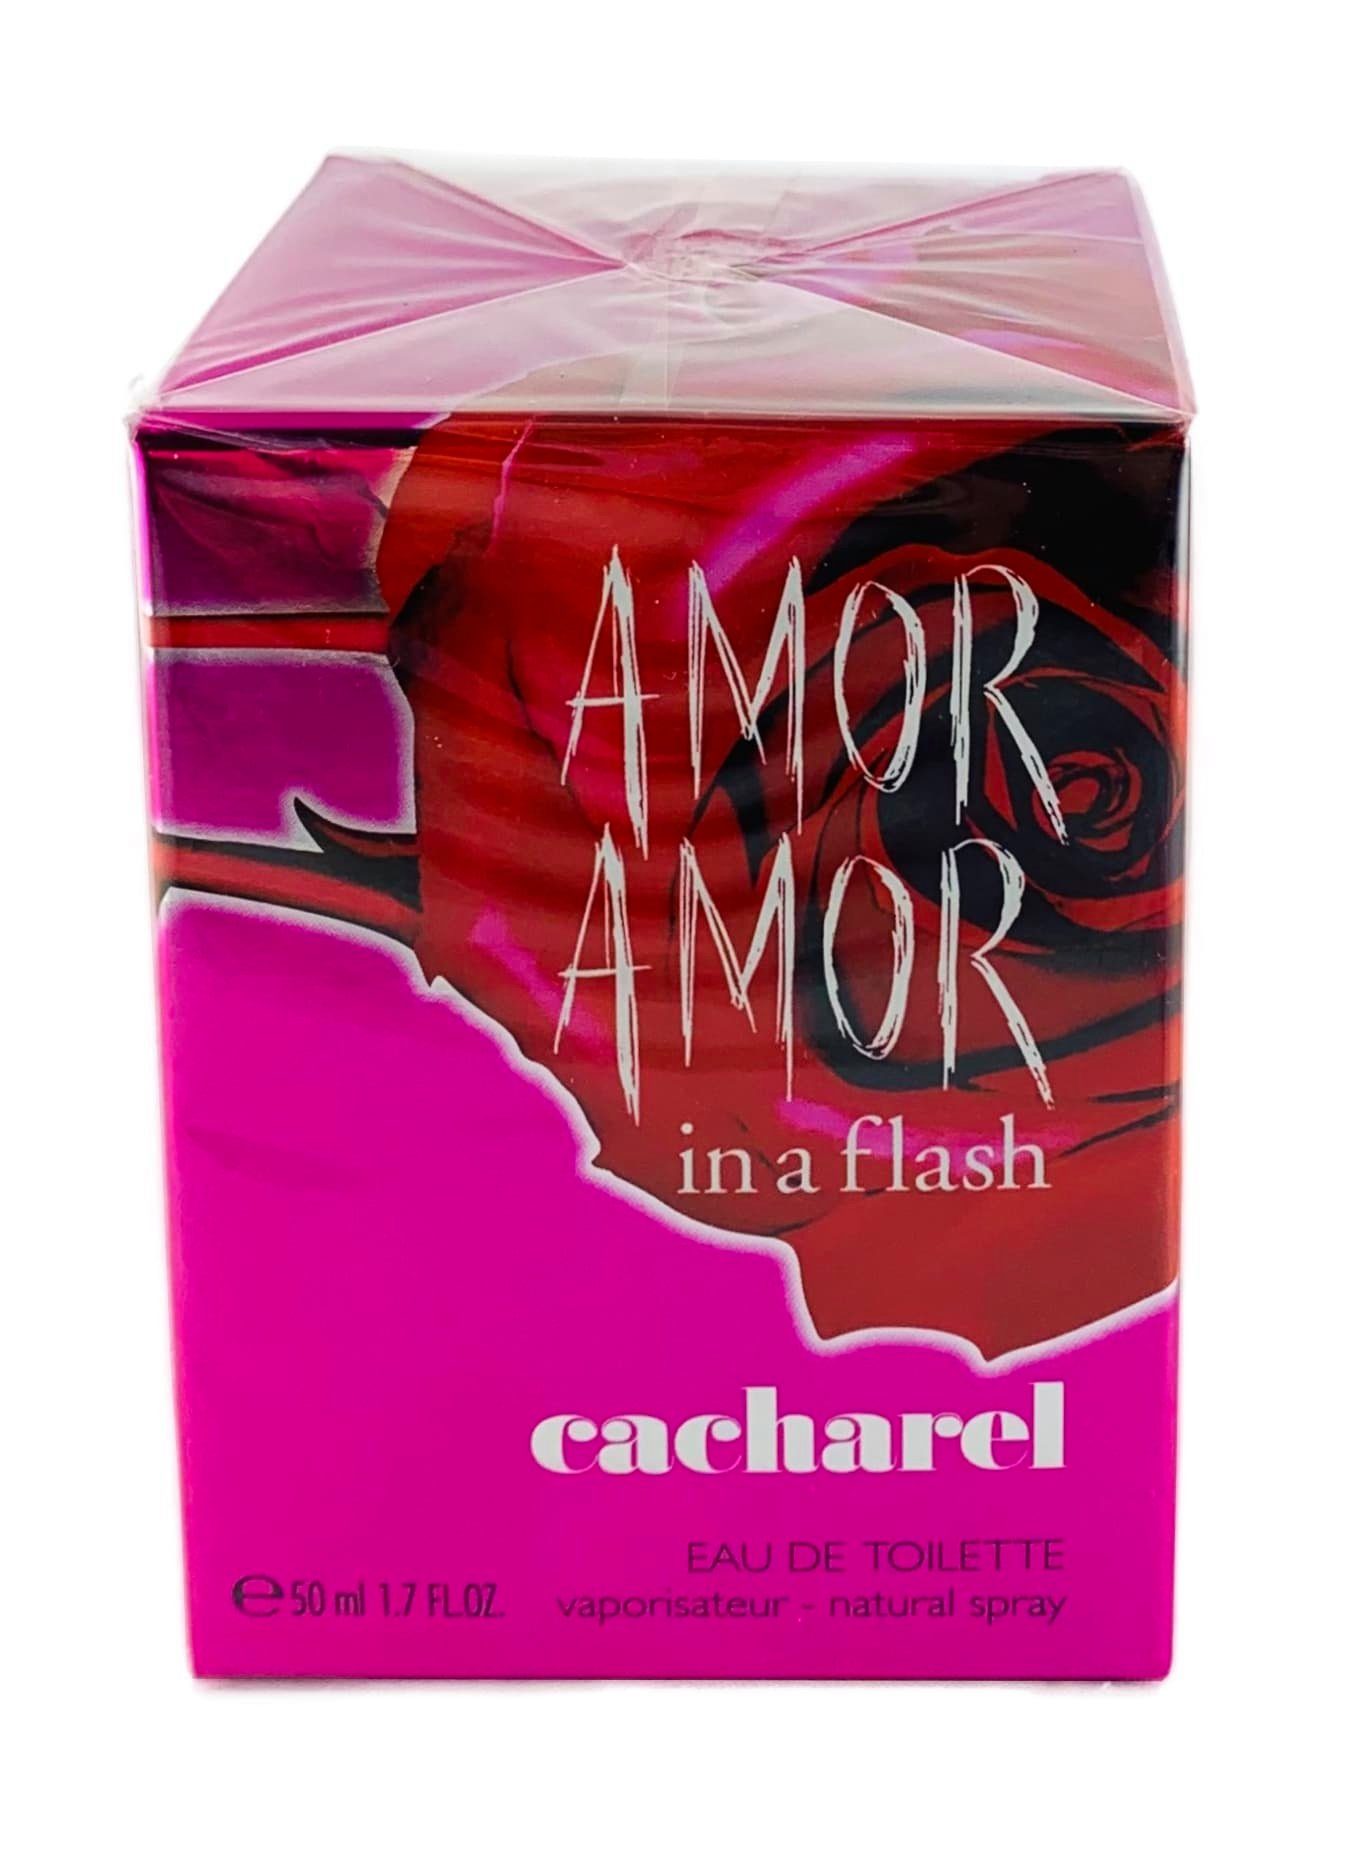 Flash" Toilette in de Eau Cacharel "Amor Edt ml CACHAREL Spray 50 a